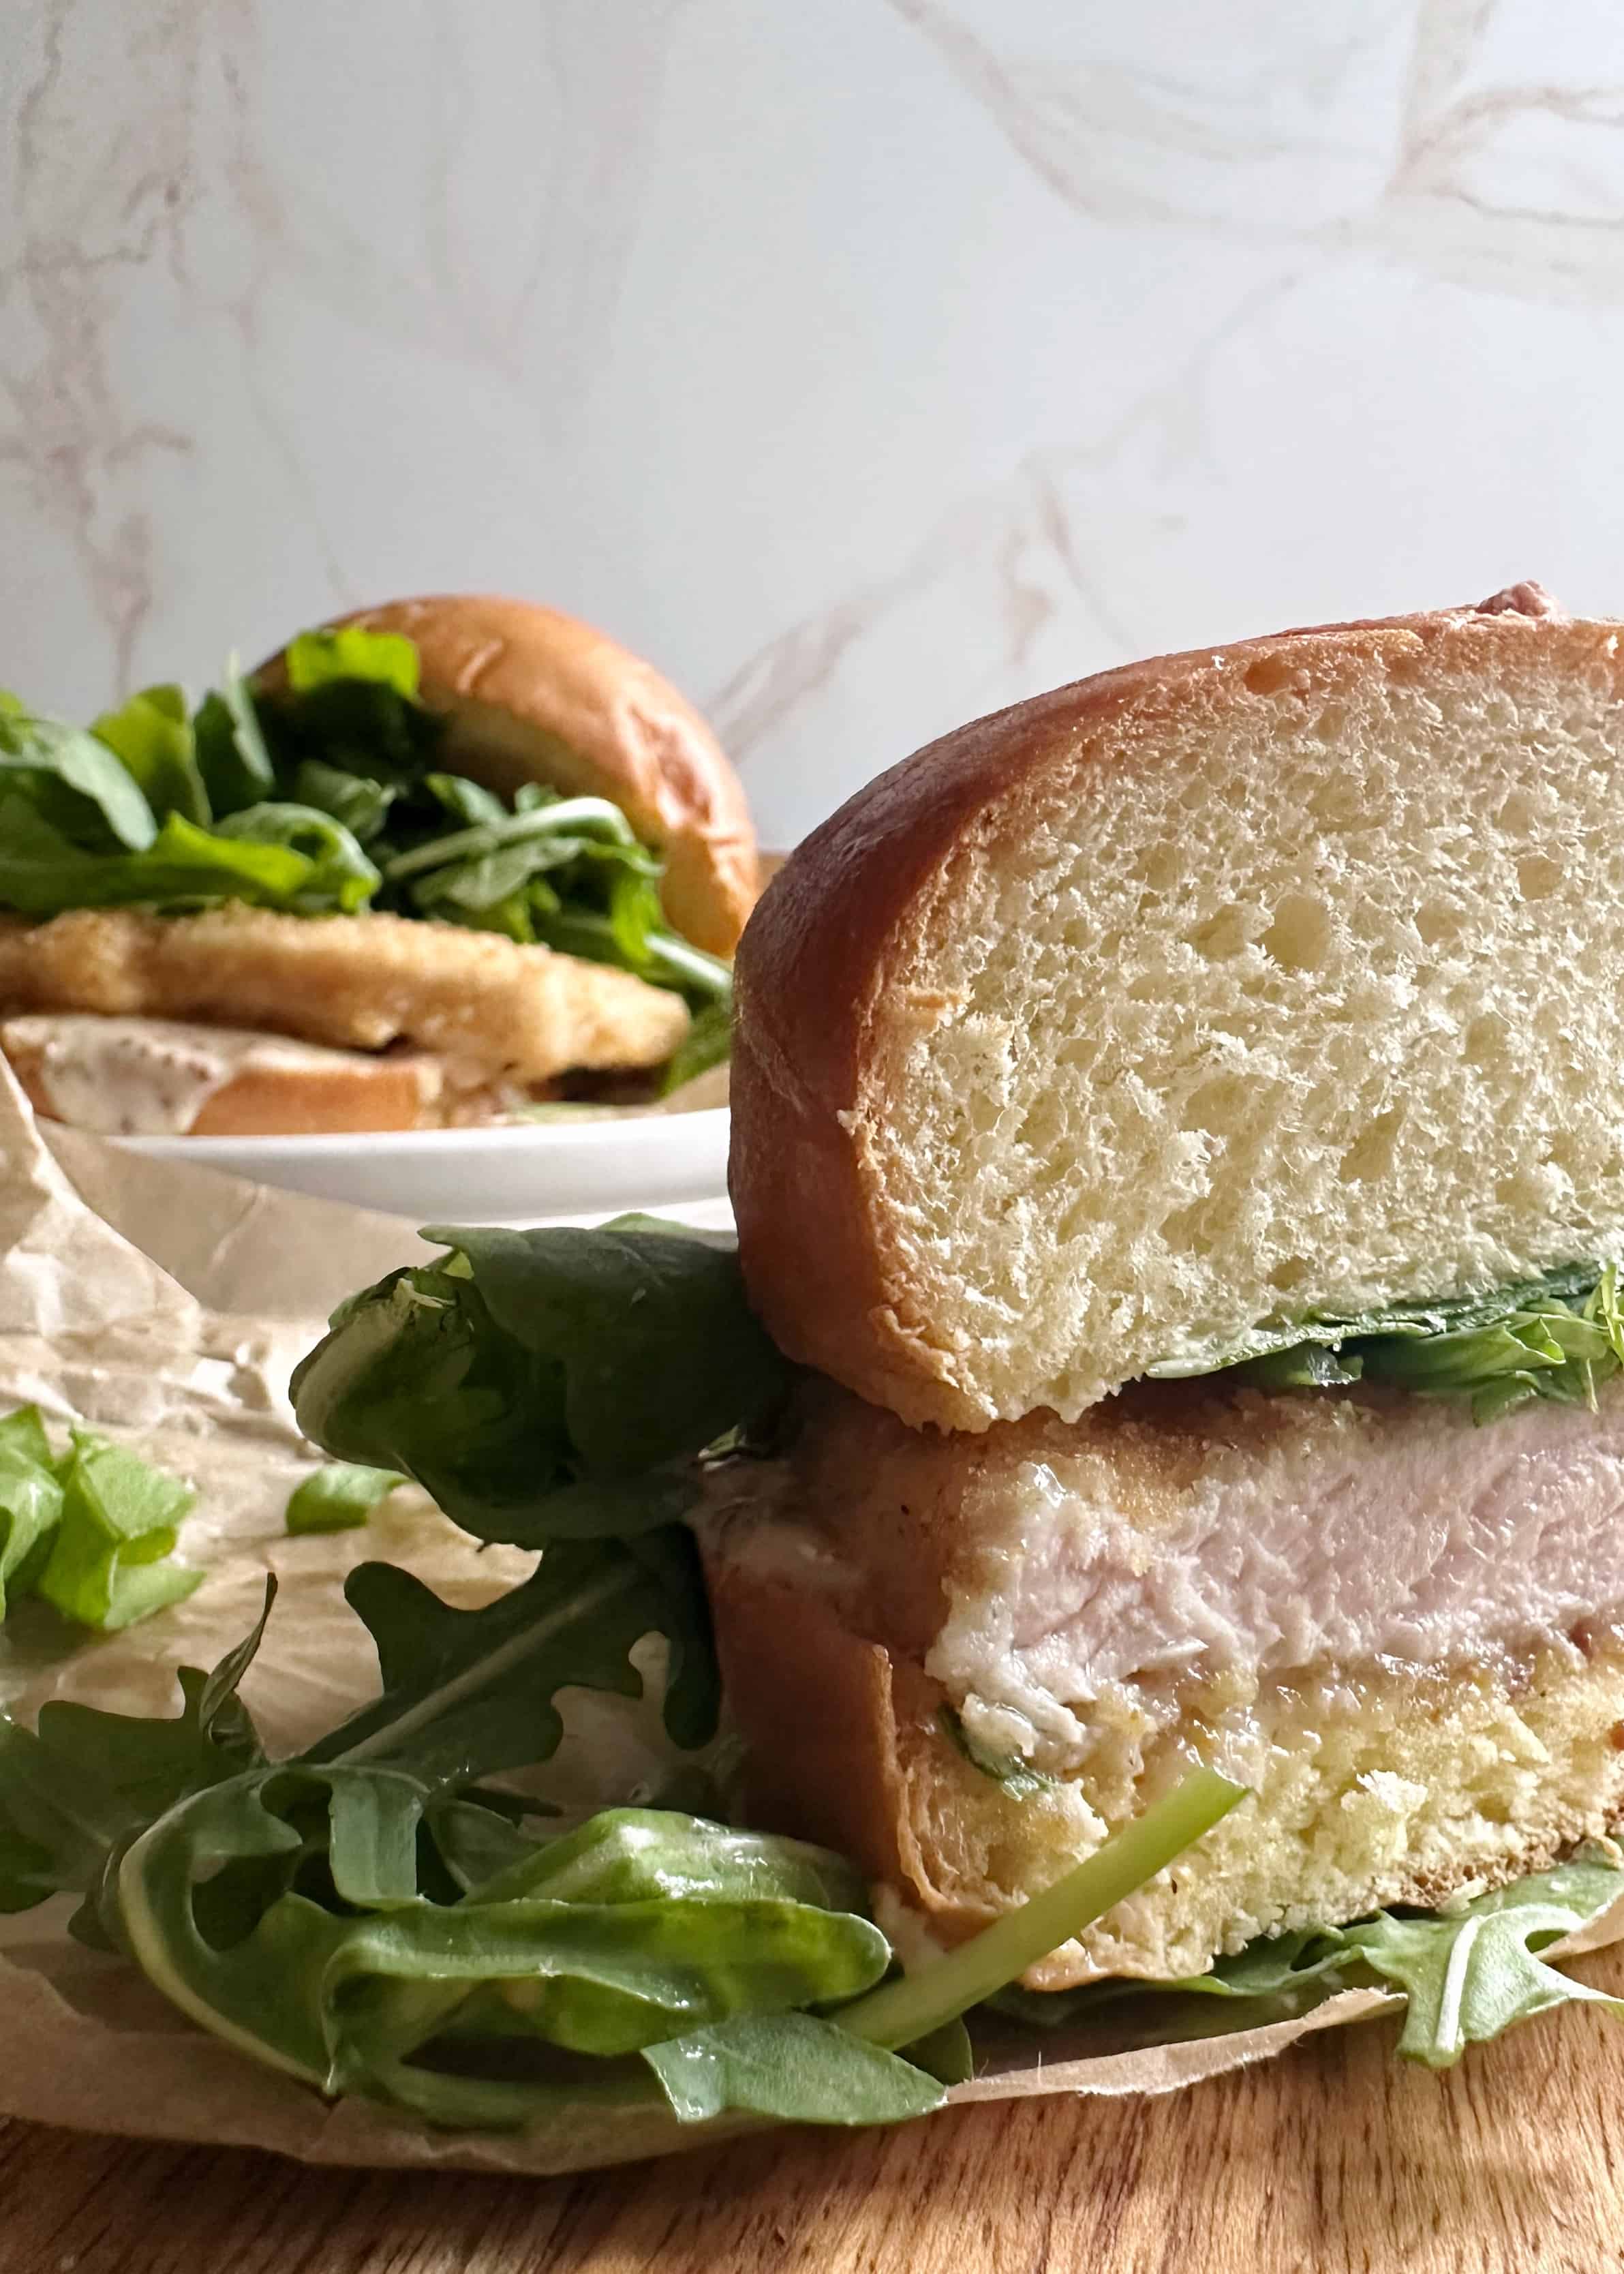 pork schnitzel sandwich cut in half